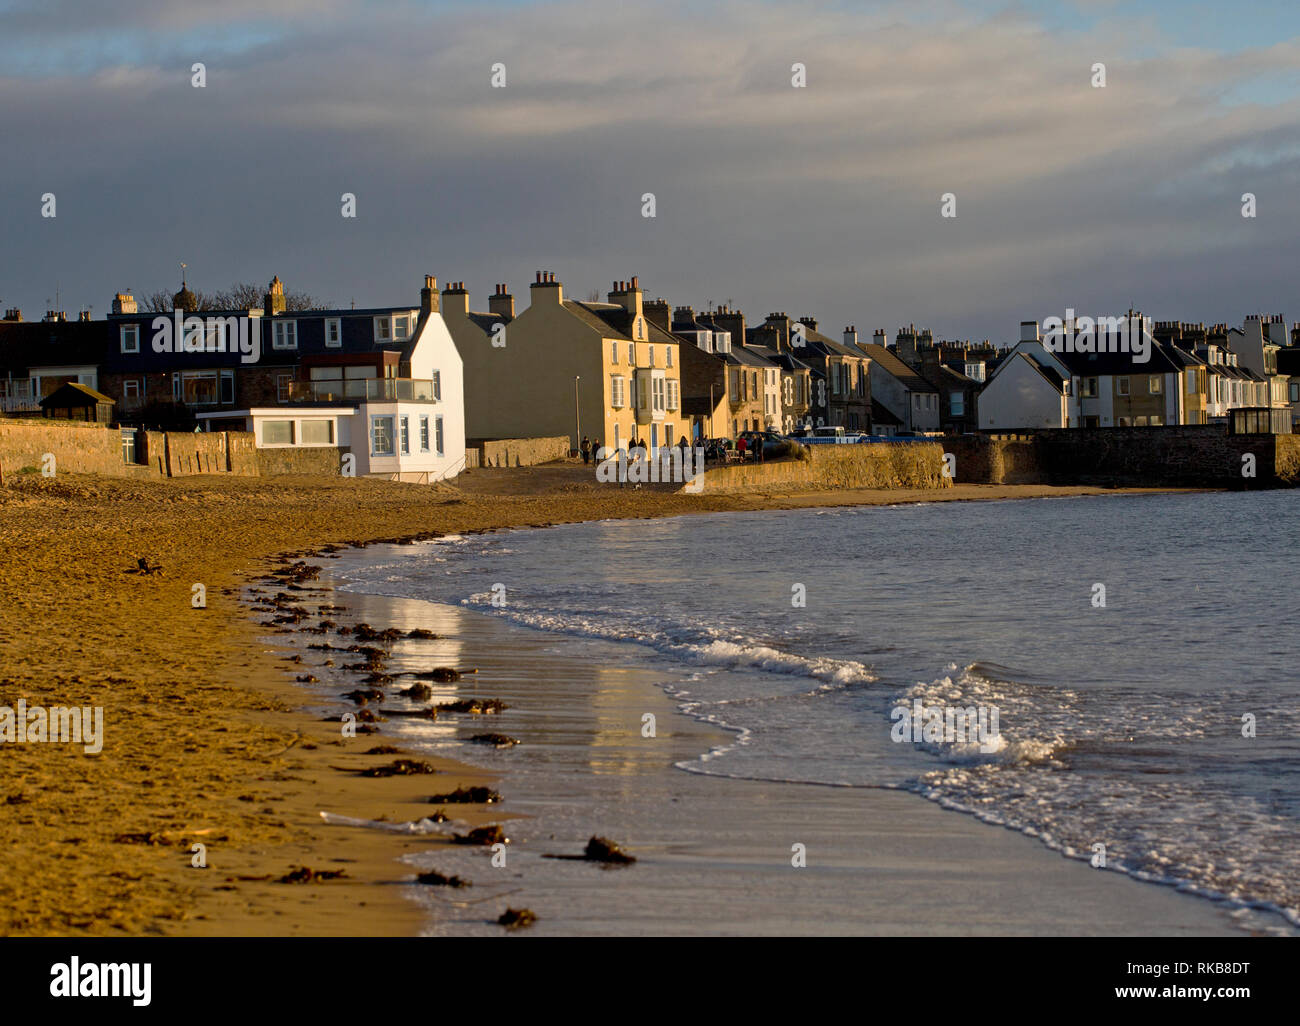 Elie beach, Fife, Scotland Stock Photo - Alamy